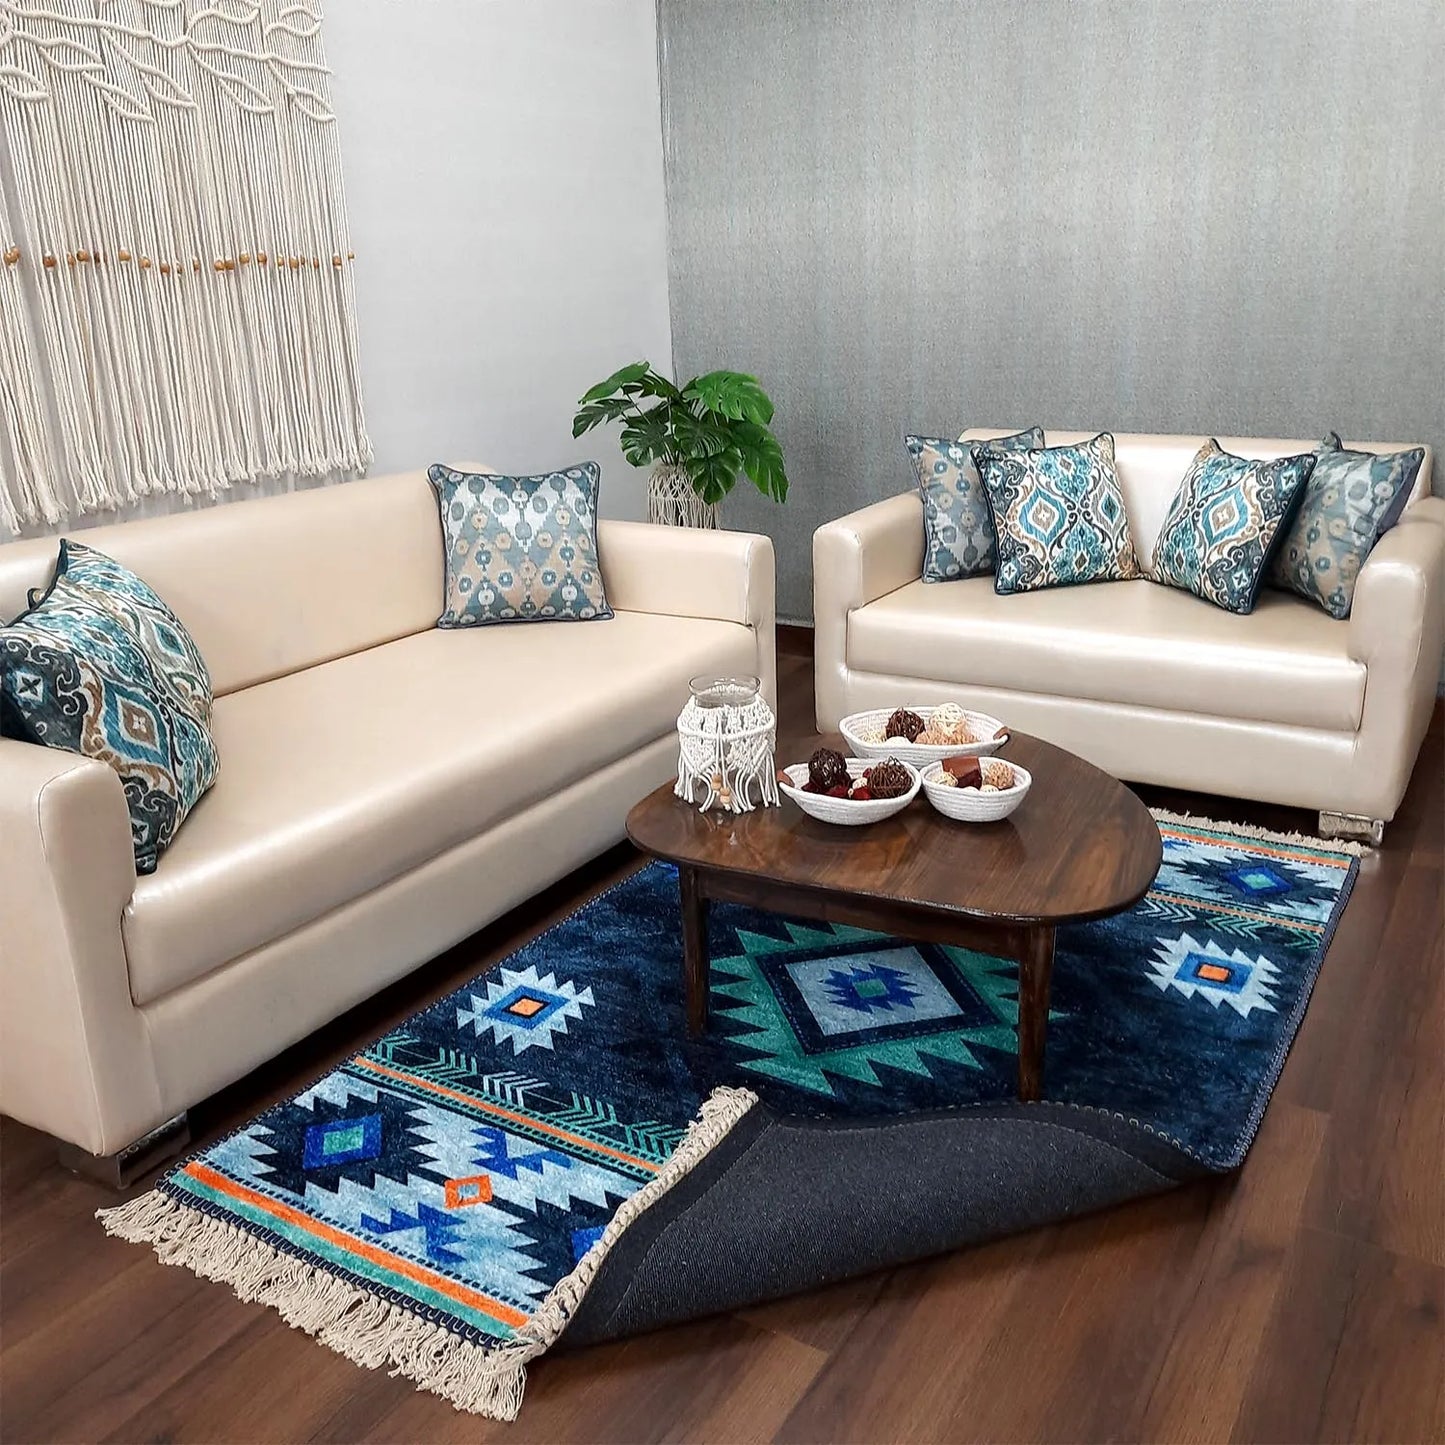 Avioni Home Faux Silk Carpet For Living Room – Ethnic Tribal Design Premium Rug Blue